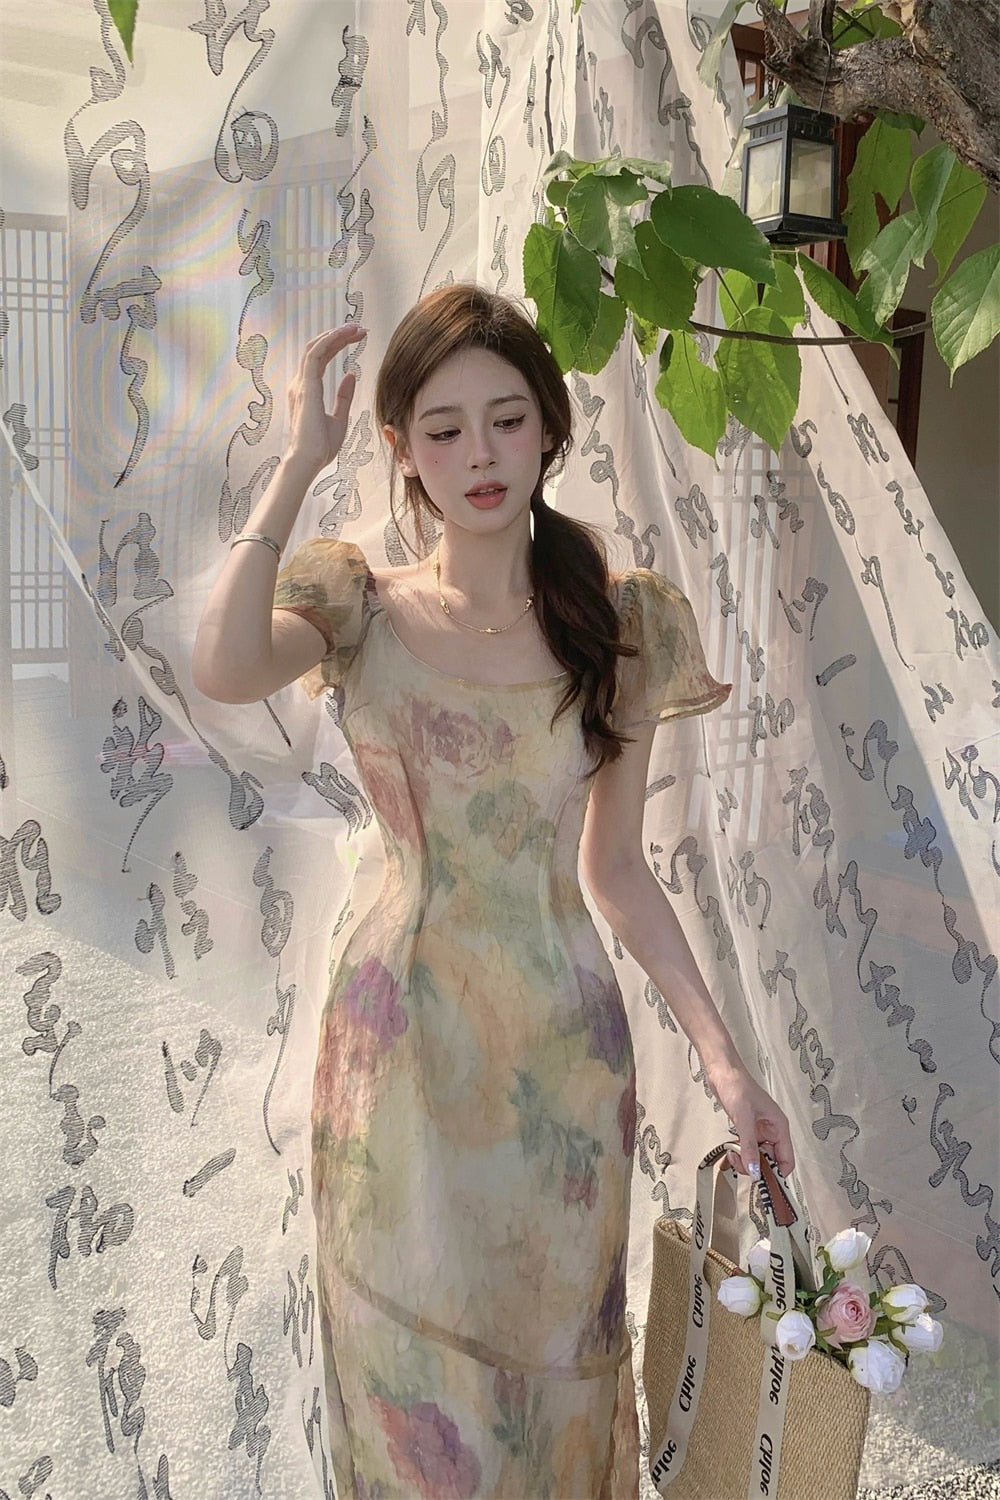 A Memory of Prismatic Roses at Twilight Cottagecore Princesscore Fairycore Coquette Kawaii Dress